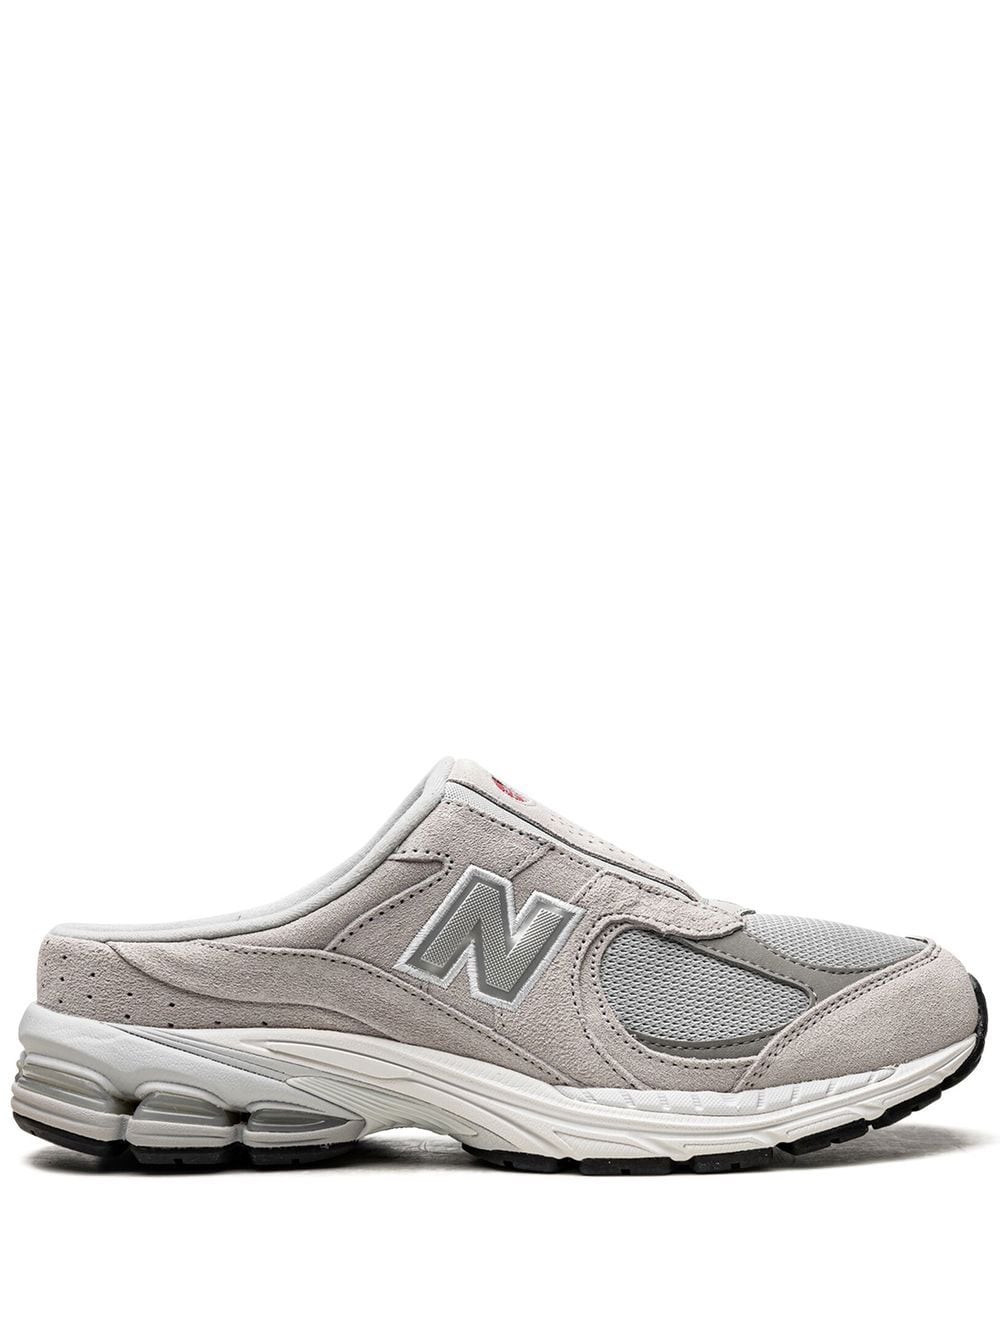 New Balance 2002R "Grey" sneaker mules von New Balance